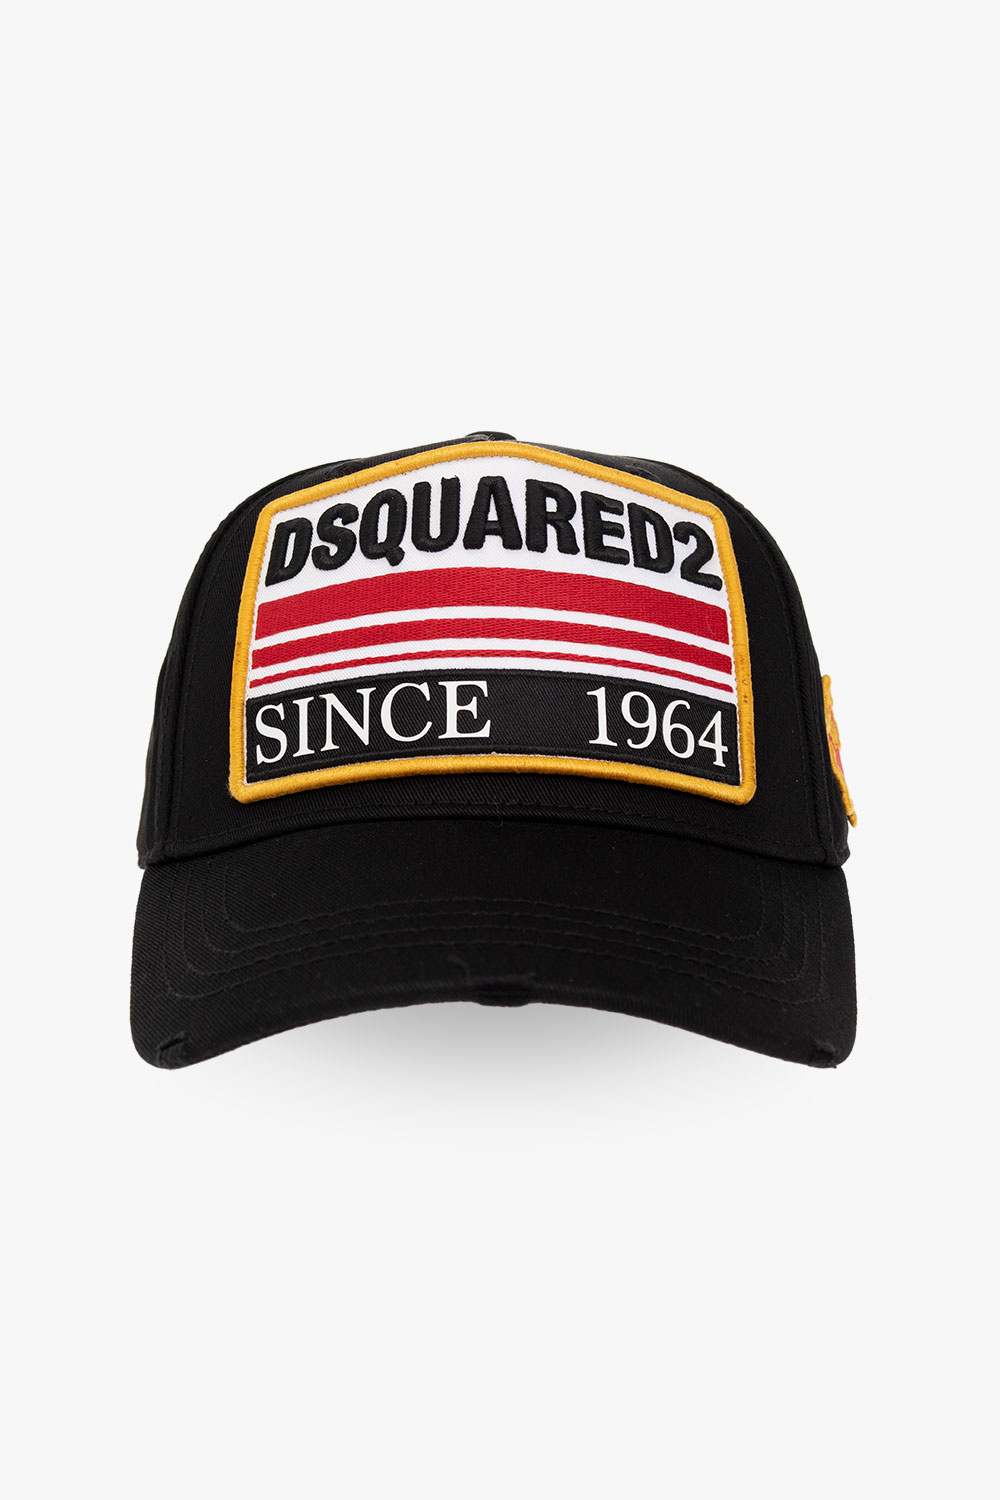 Dsquared2 LA Lakers Mitchell & Ness Neon Snapback Hat